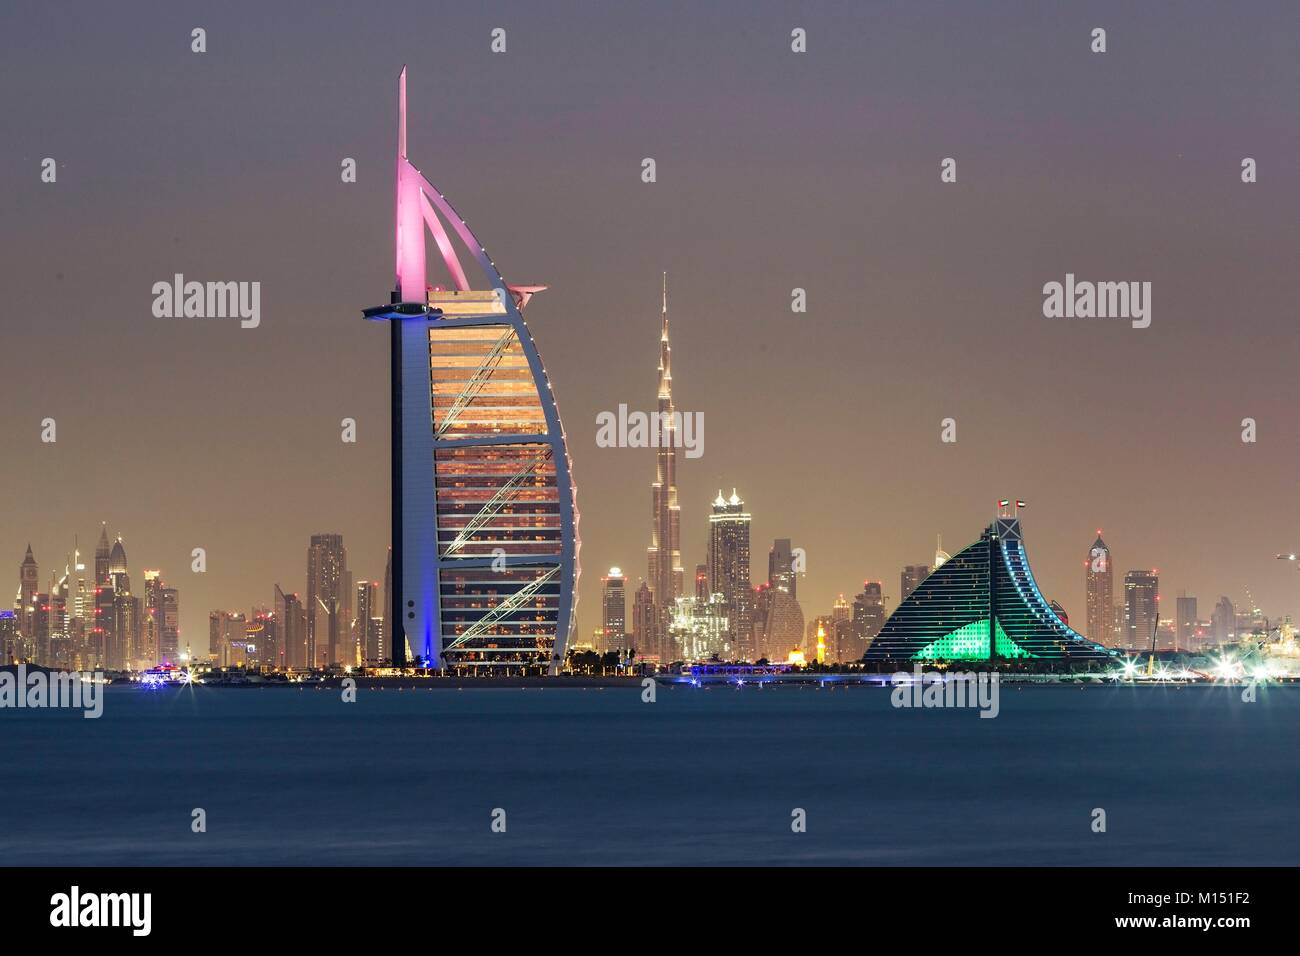 United Arab Emirates, Dubai, Burj Al Arab and Jumeirah Beach Hotel with DIFC, Business Bay and Burj Khalifa at background Stock Photo